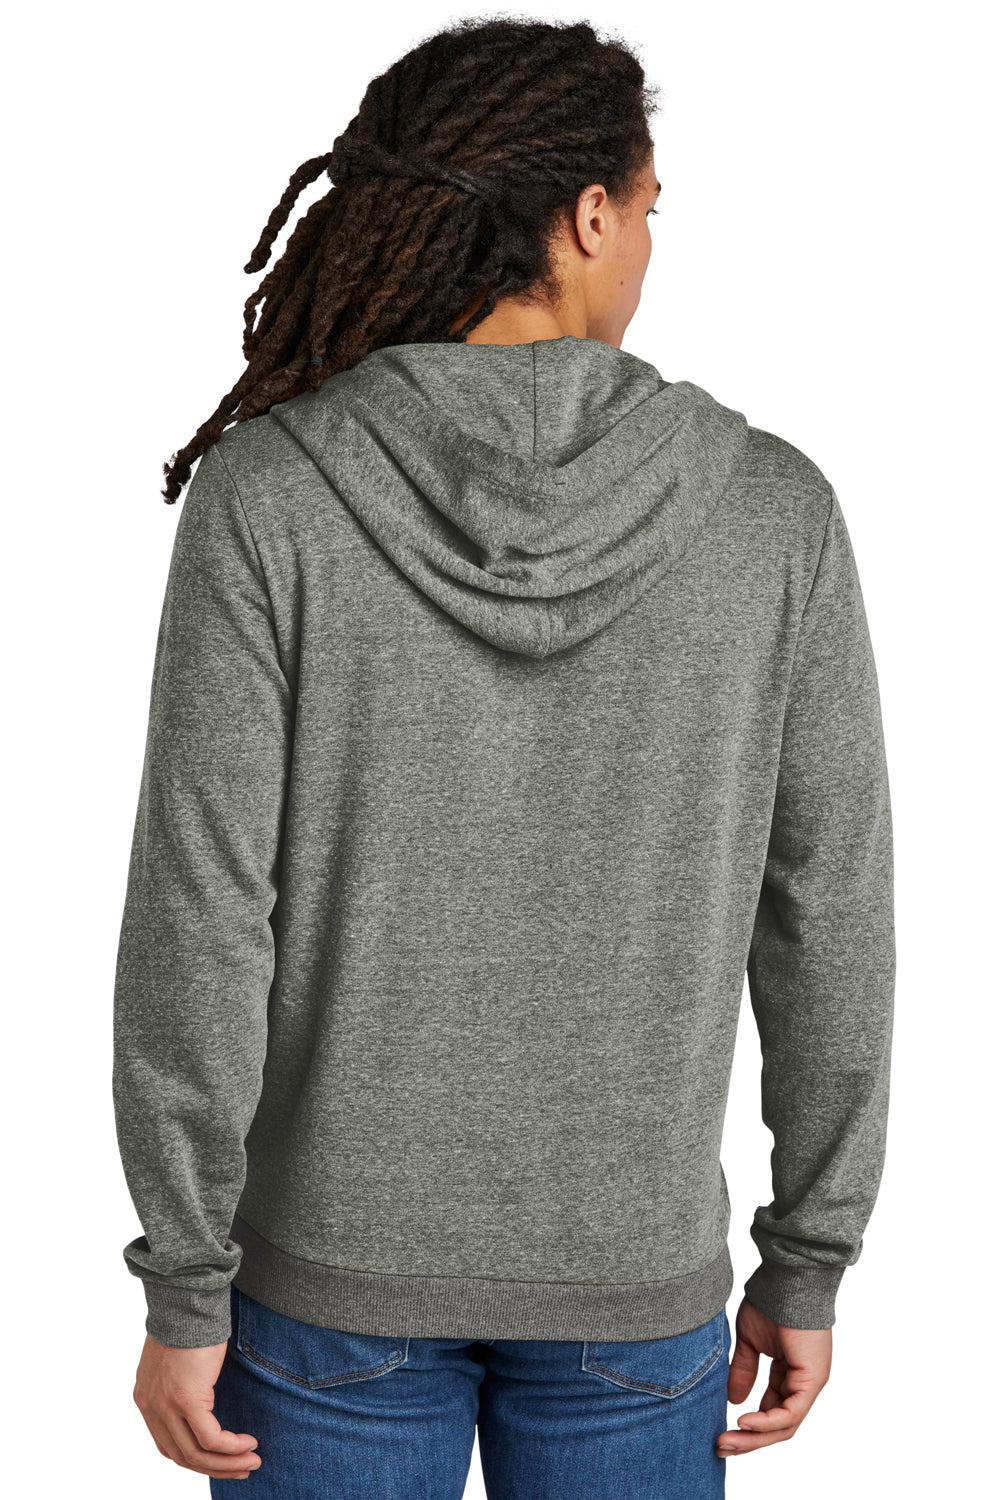 District DT1302 Mens Perfect Tri Fleece Full Zip Hooded Sweatshirt Hoodie Heather Charcoal Grey Back